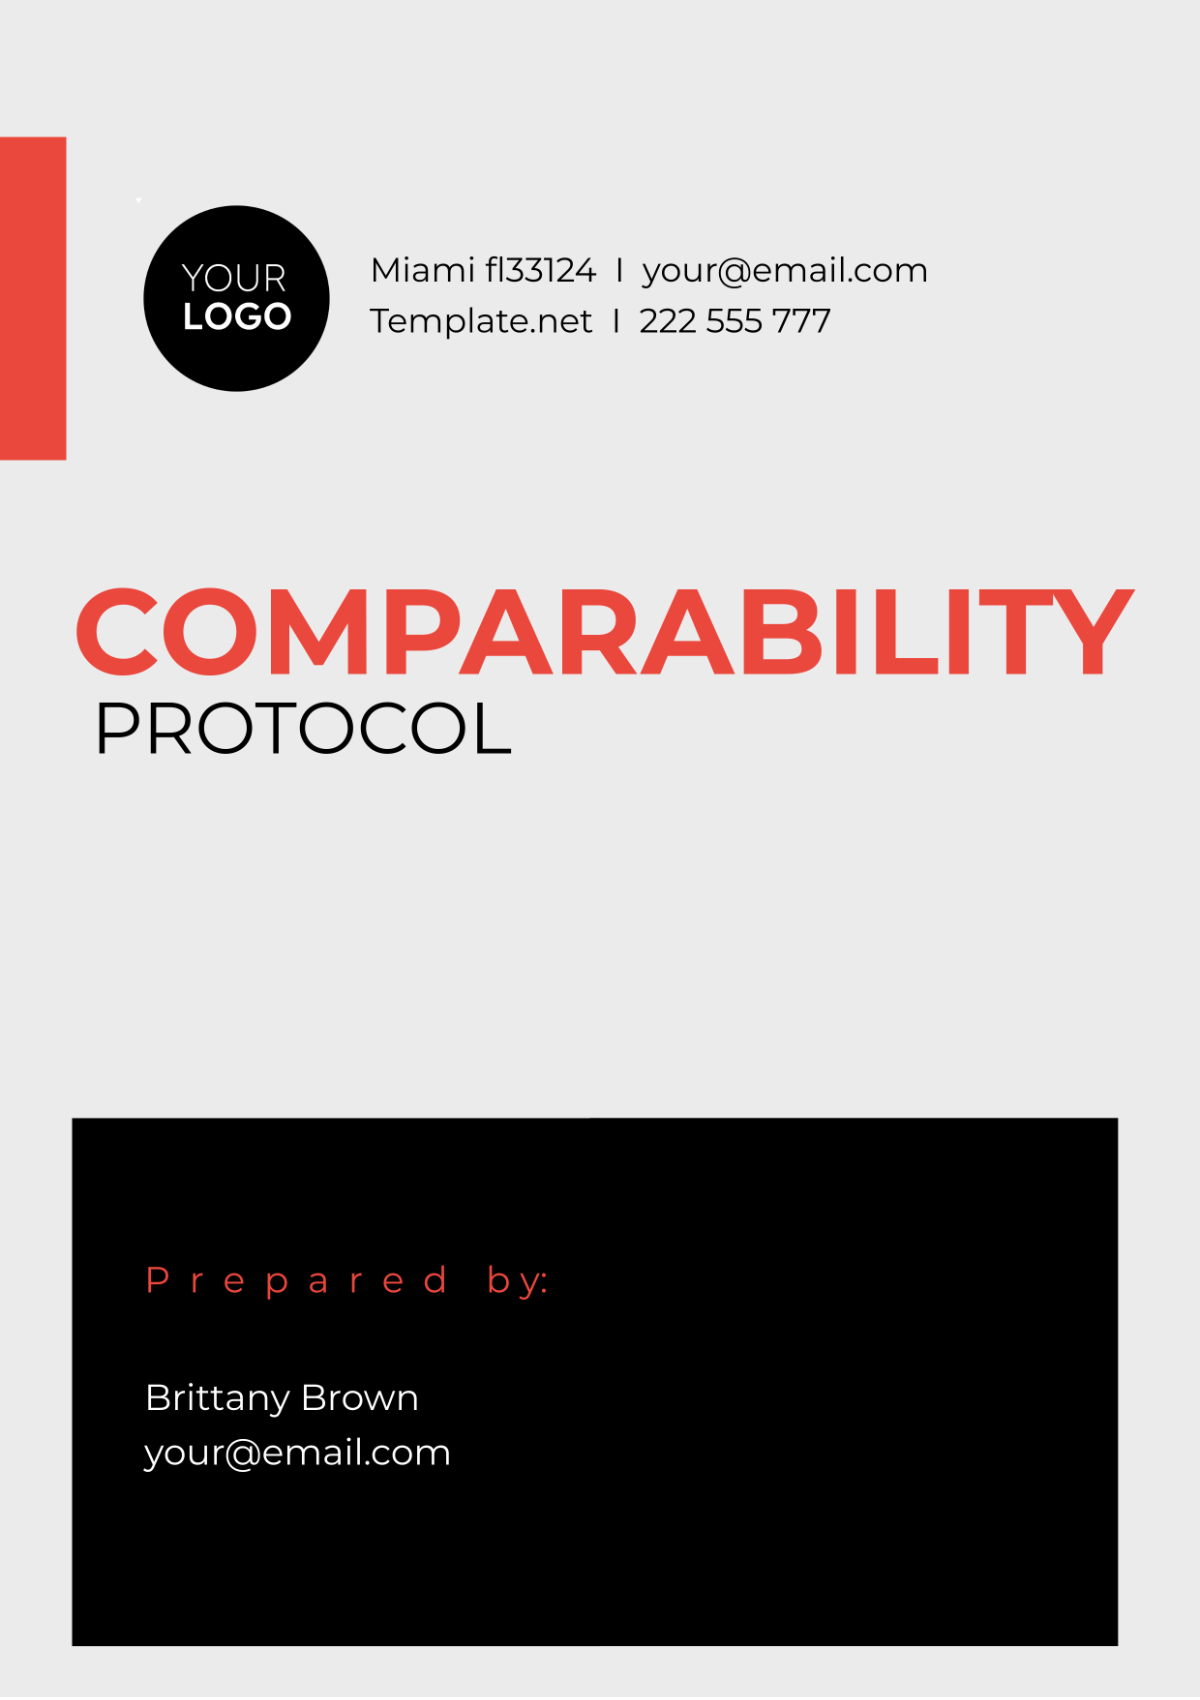 Free Comparability Protocol Template